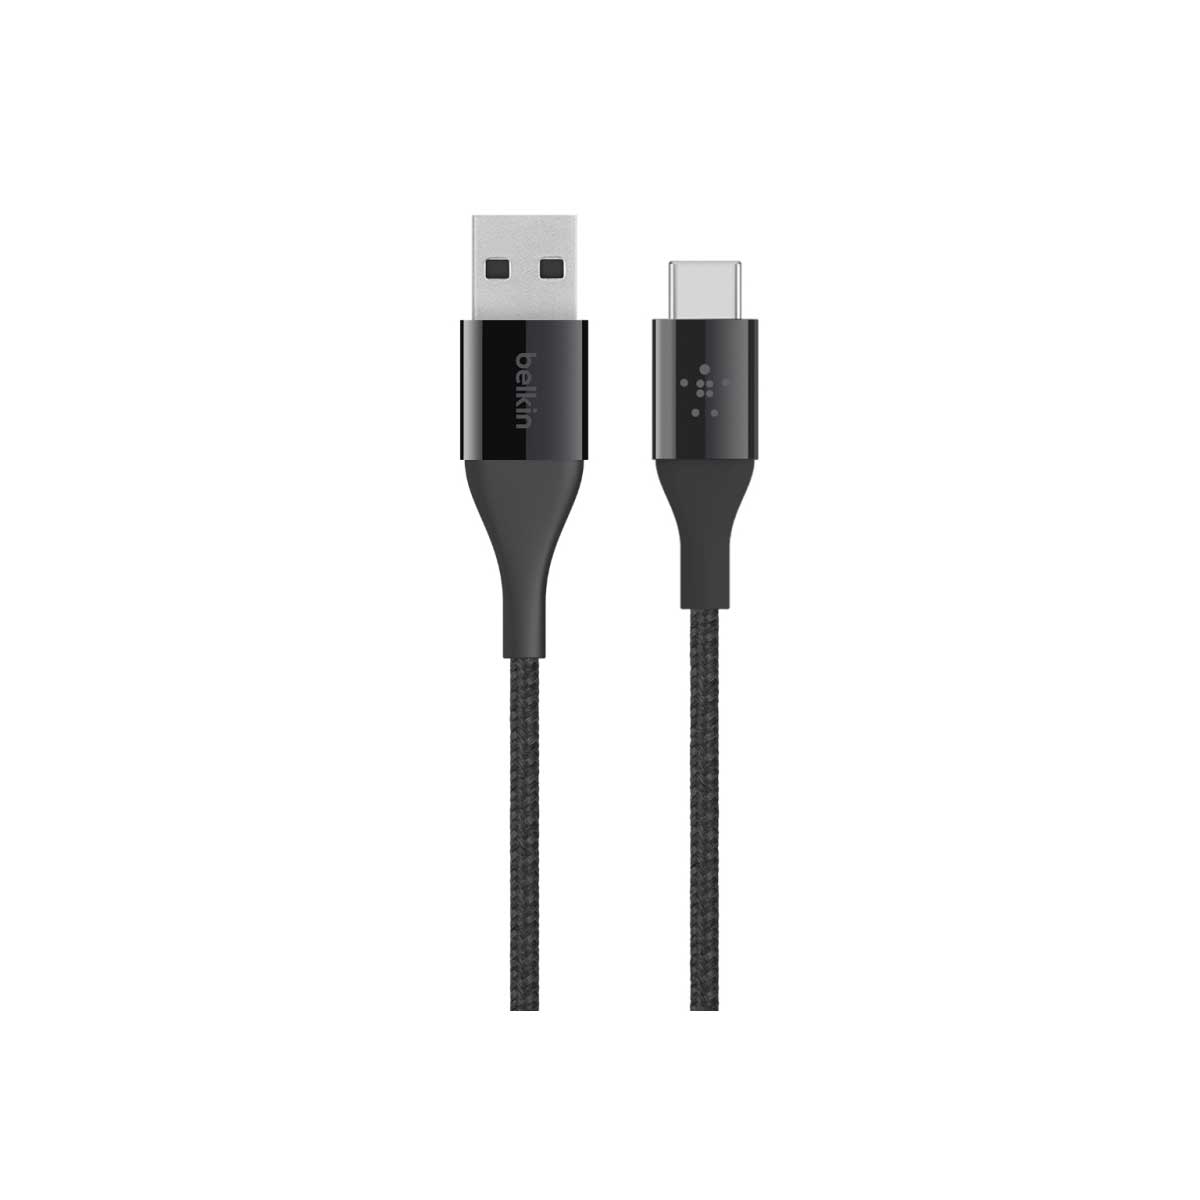 Belkin Premium Kevlar Cable USB-C 4FT - Black